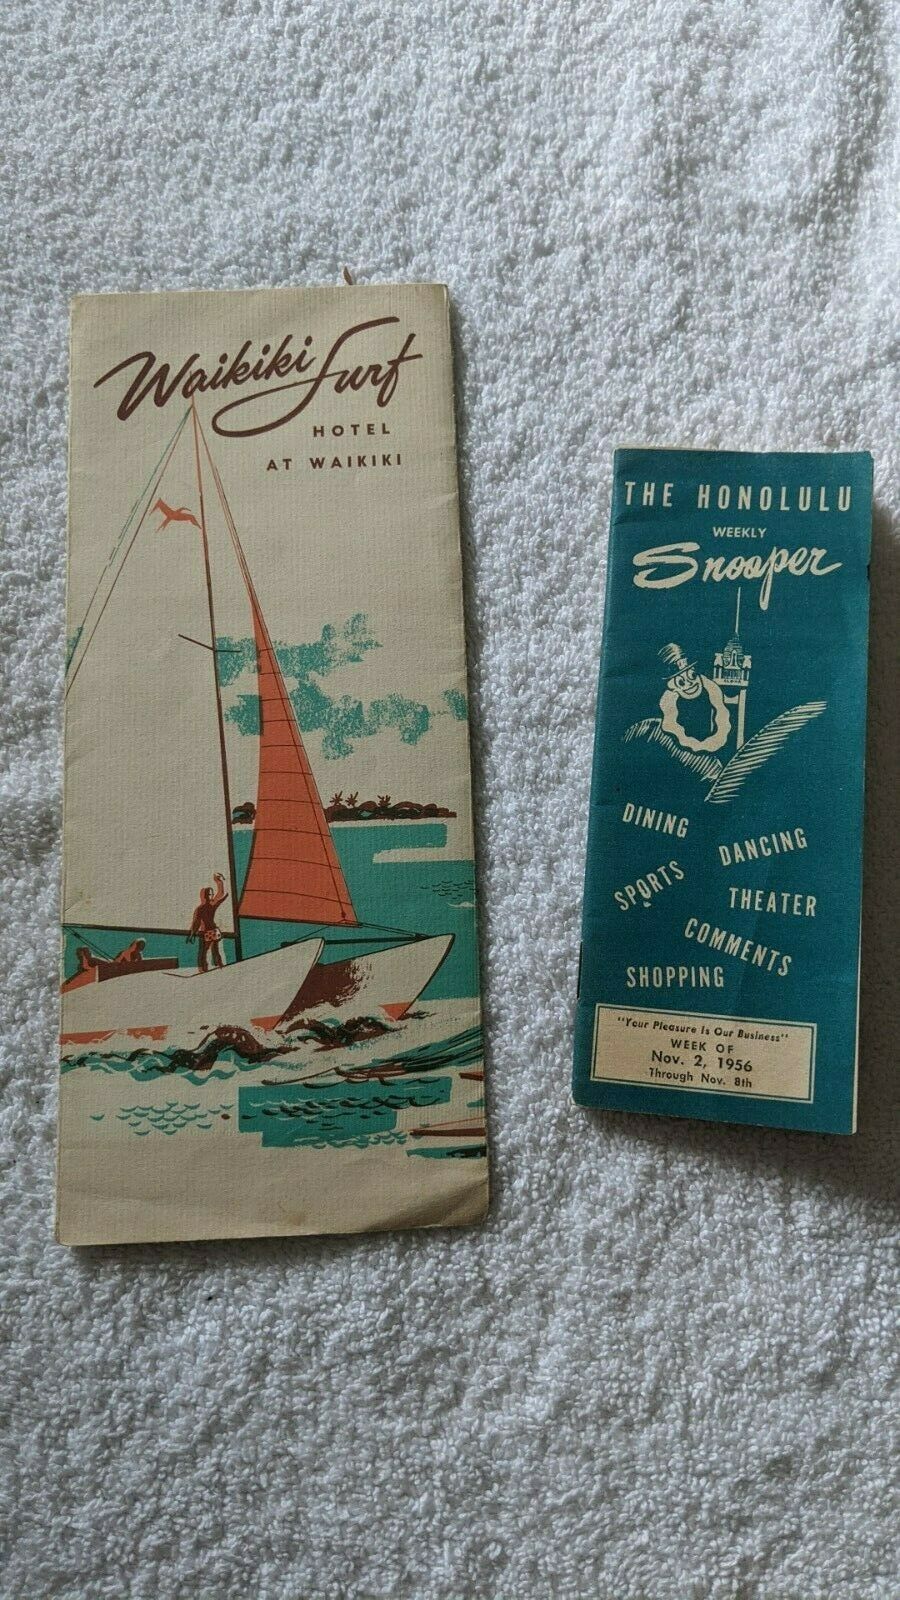 Waikiki Hotel Brochure And The Honolulu Snooper 1956